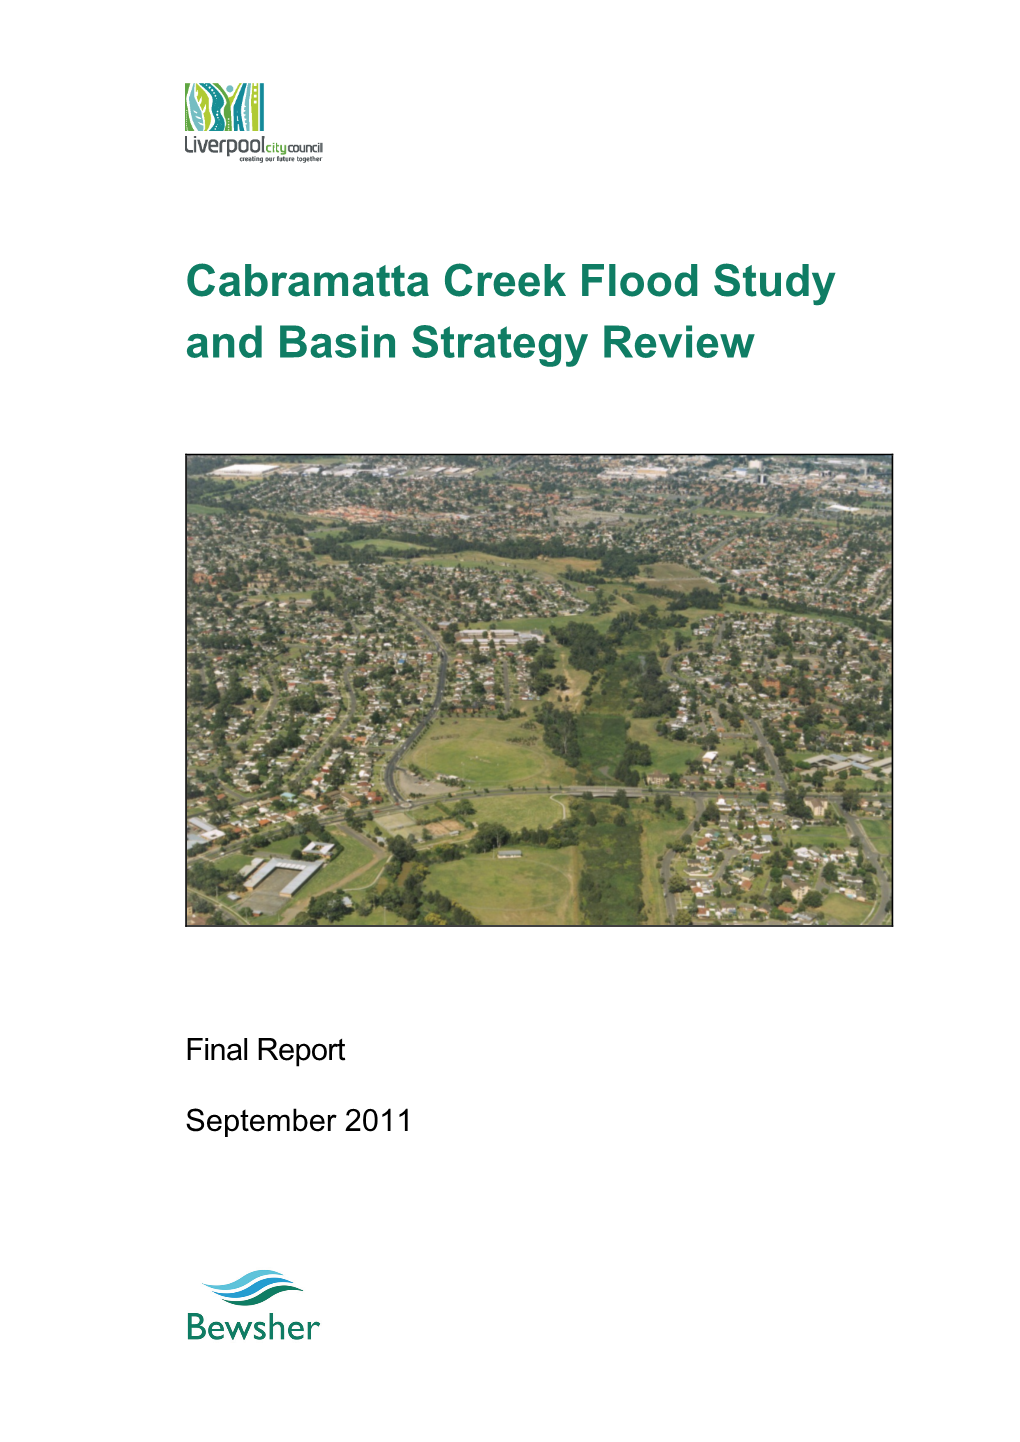 Cabramatta Creek Flood Study and Basin Strategy Review, 2011